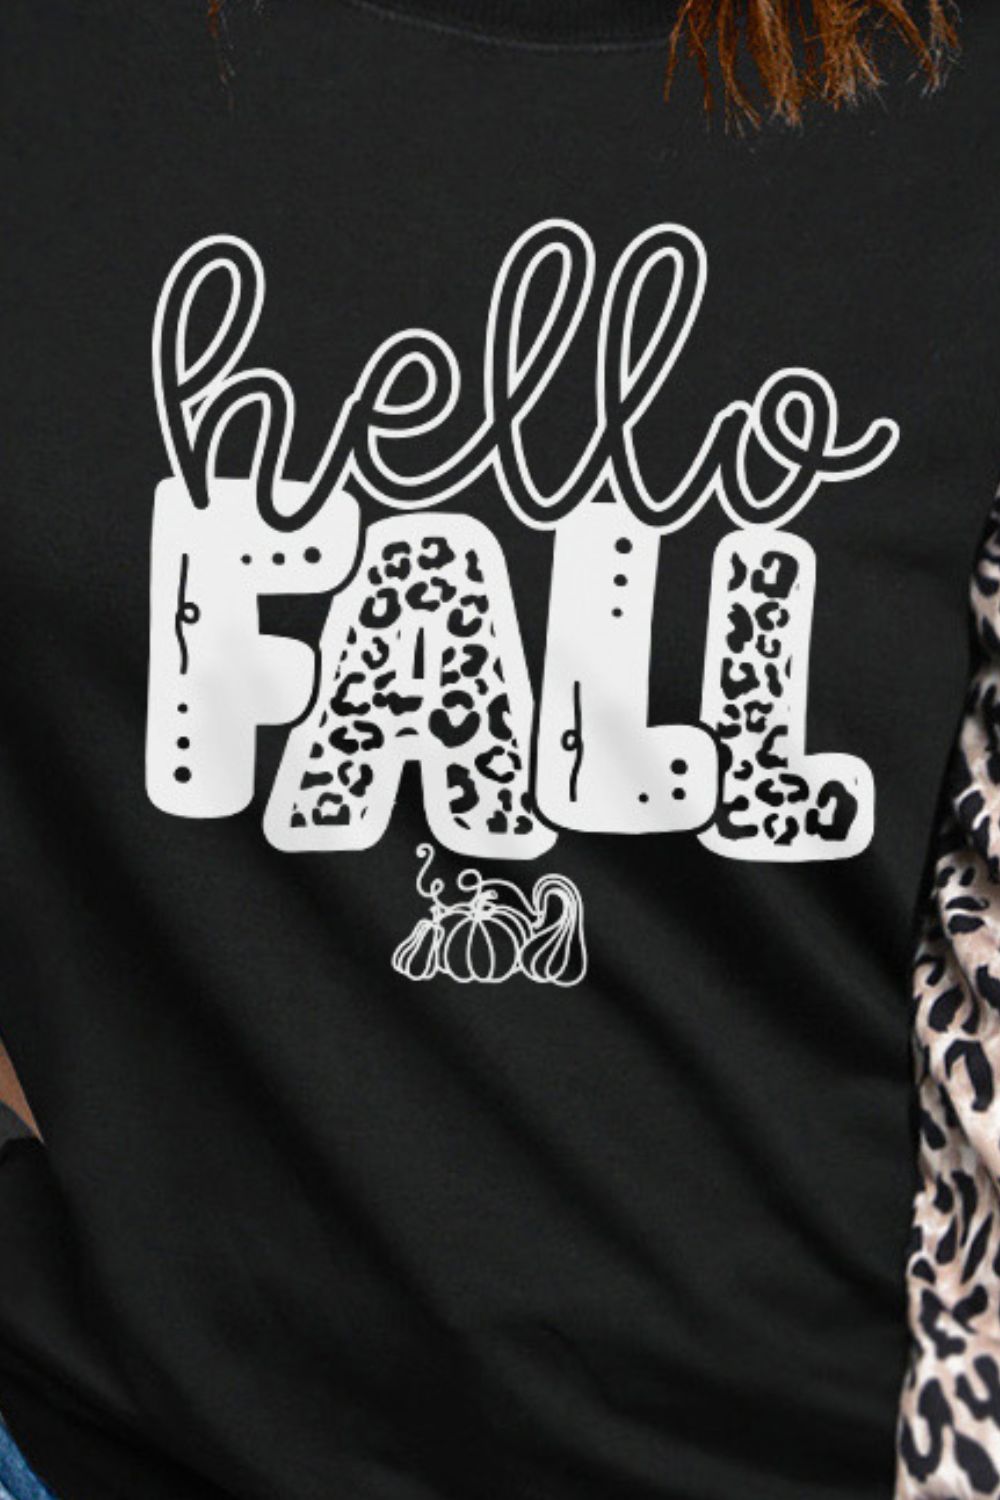 HELLO FALL Graphic Leopard Sweatshirt